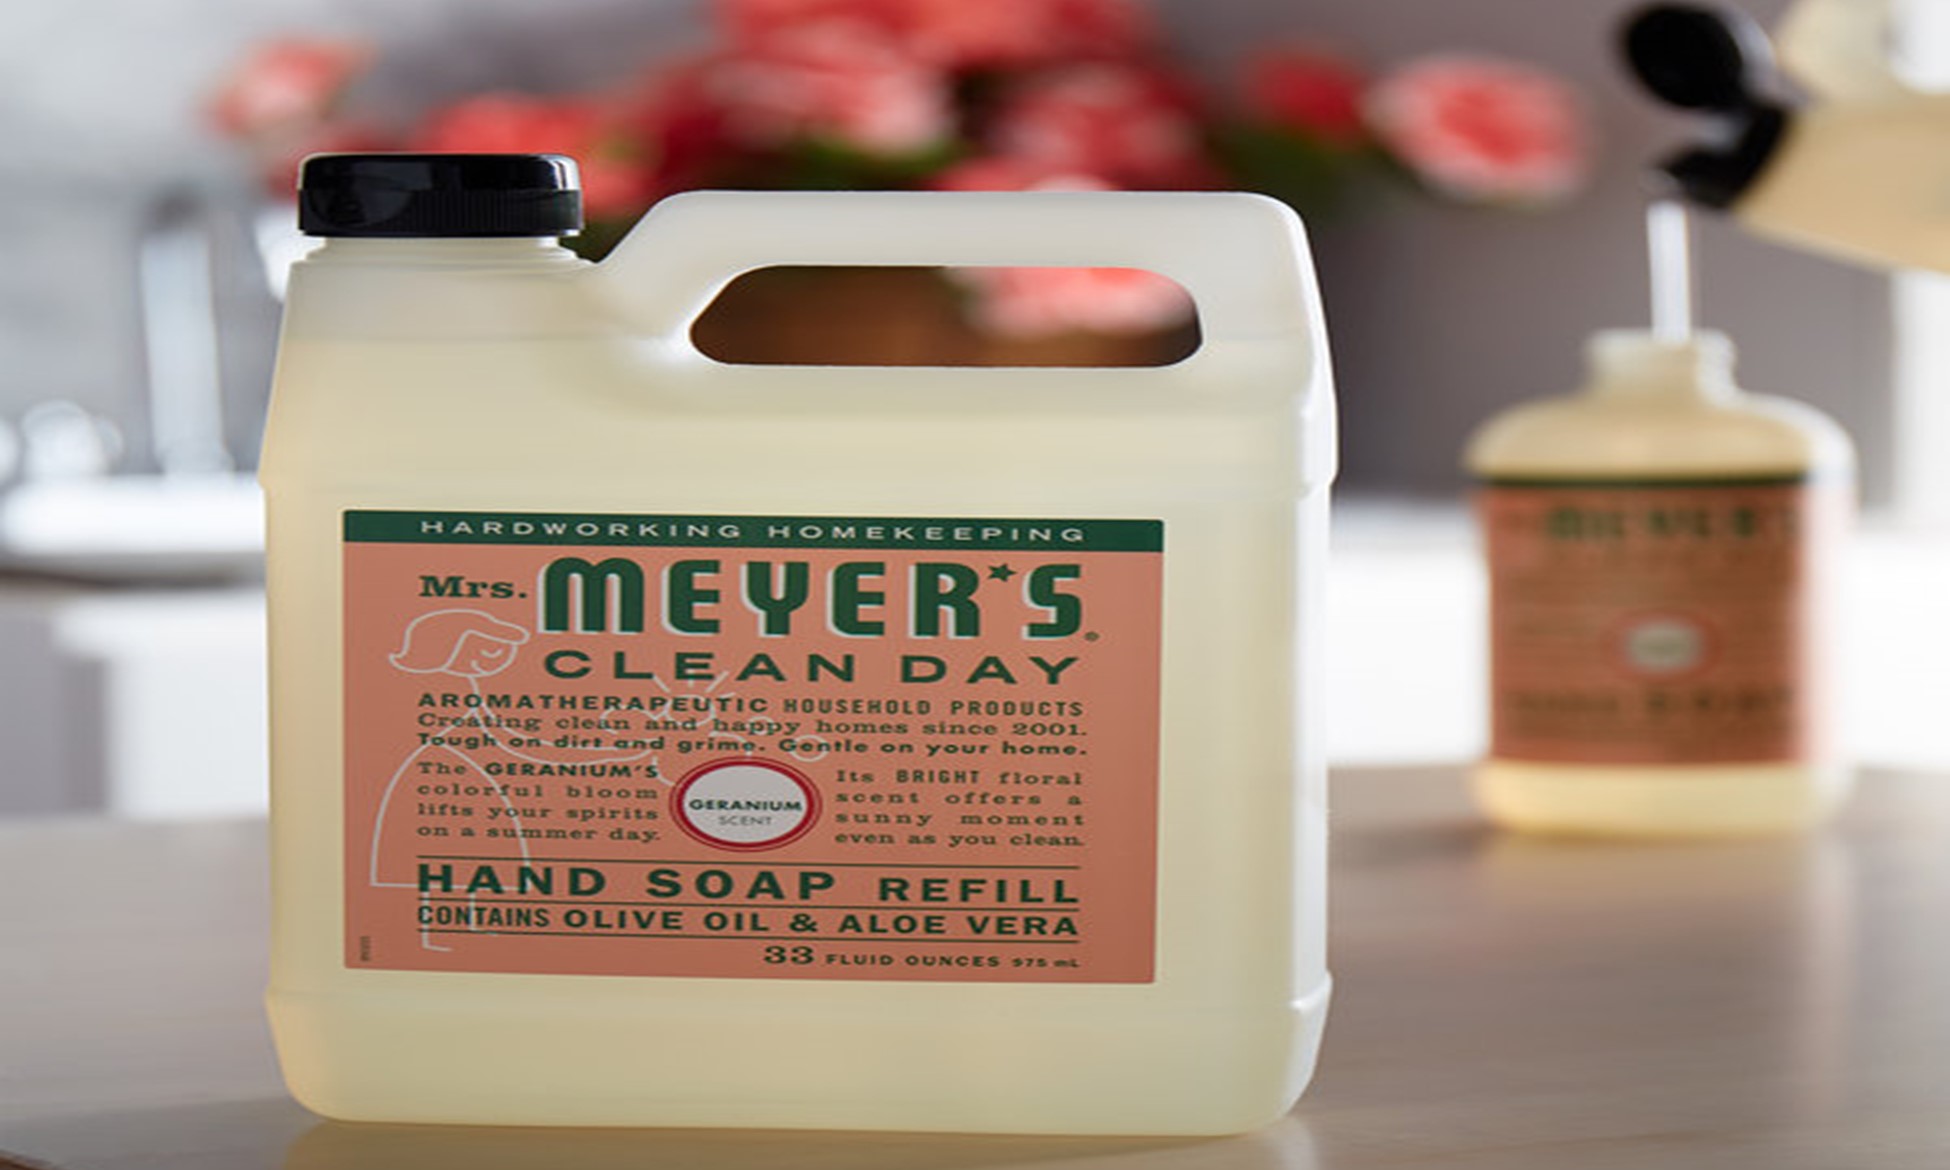 Hand soap refills